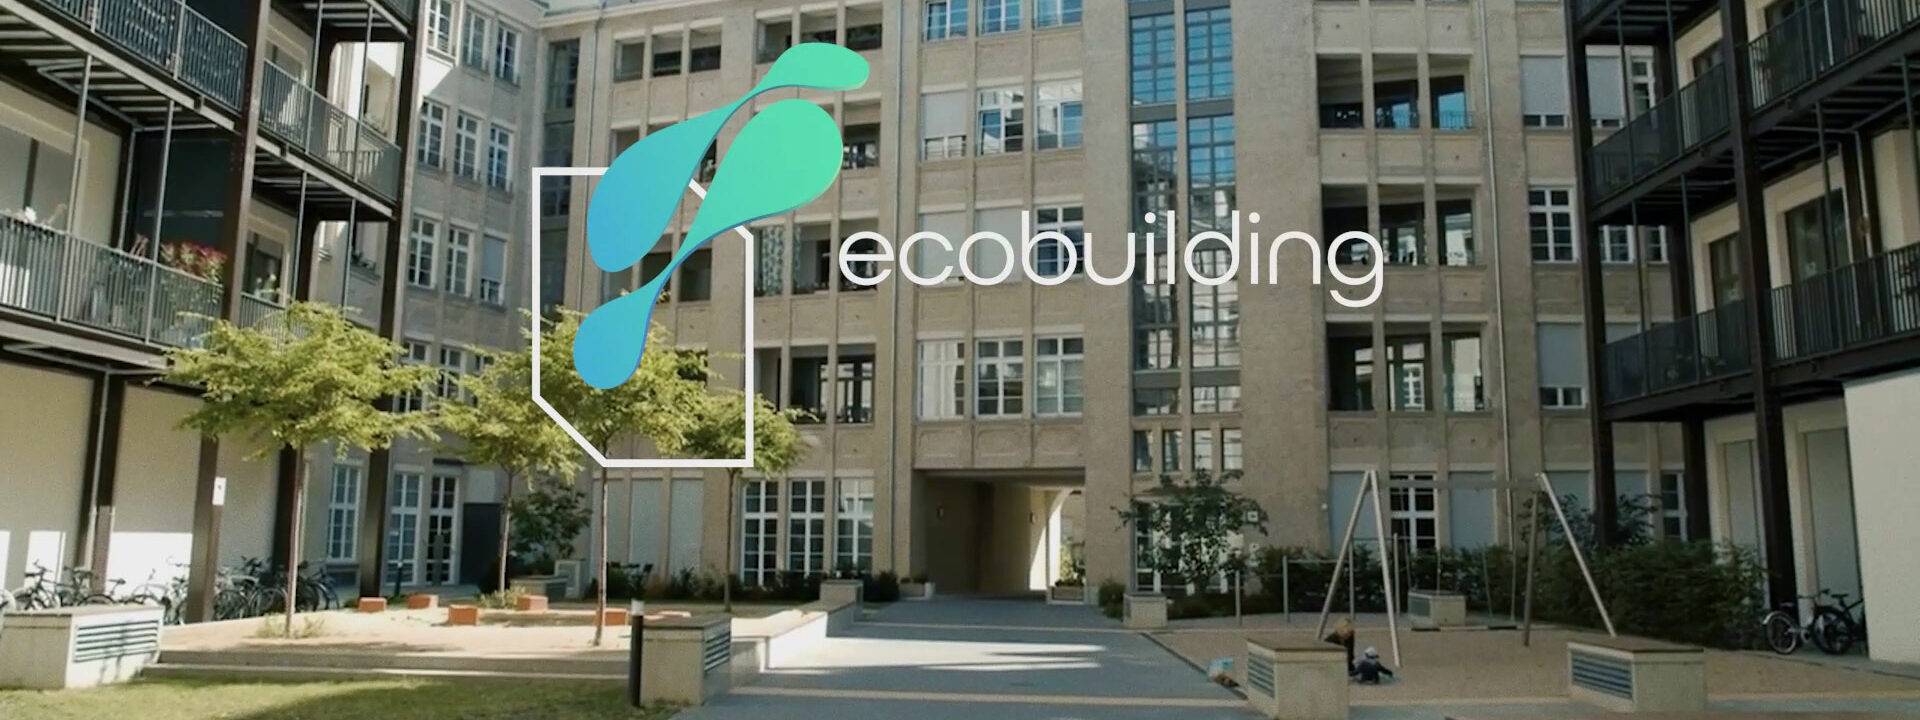 Ecobuilding Header